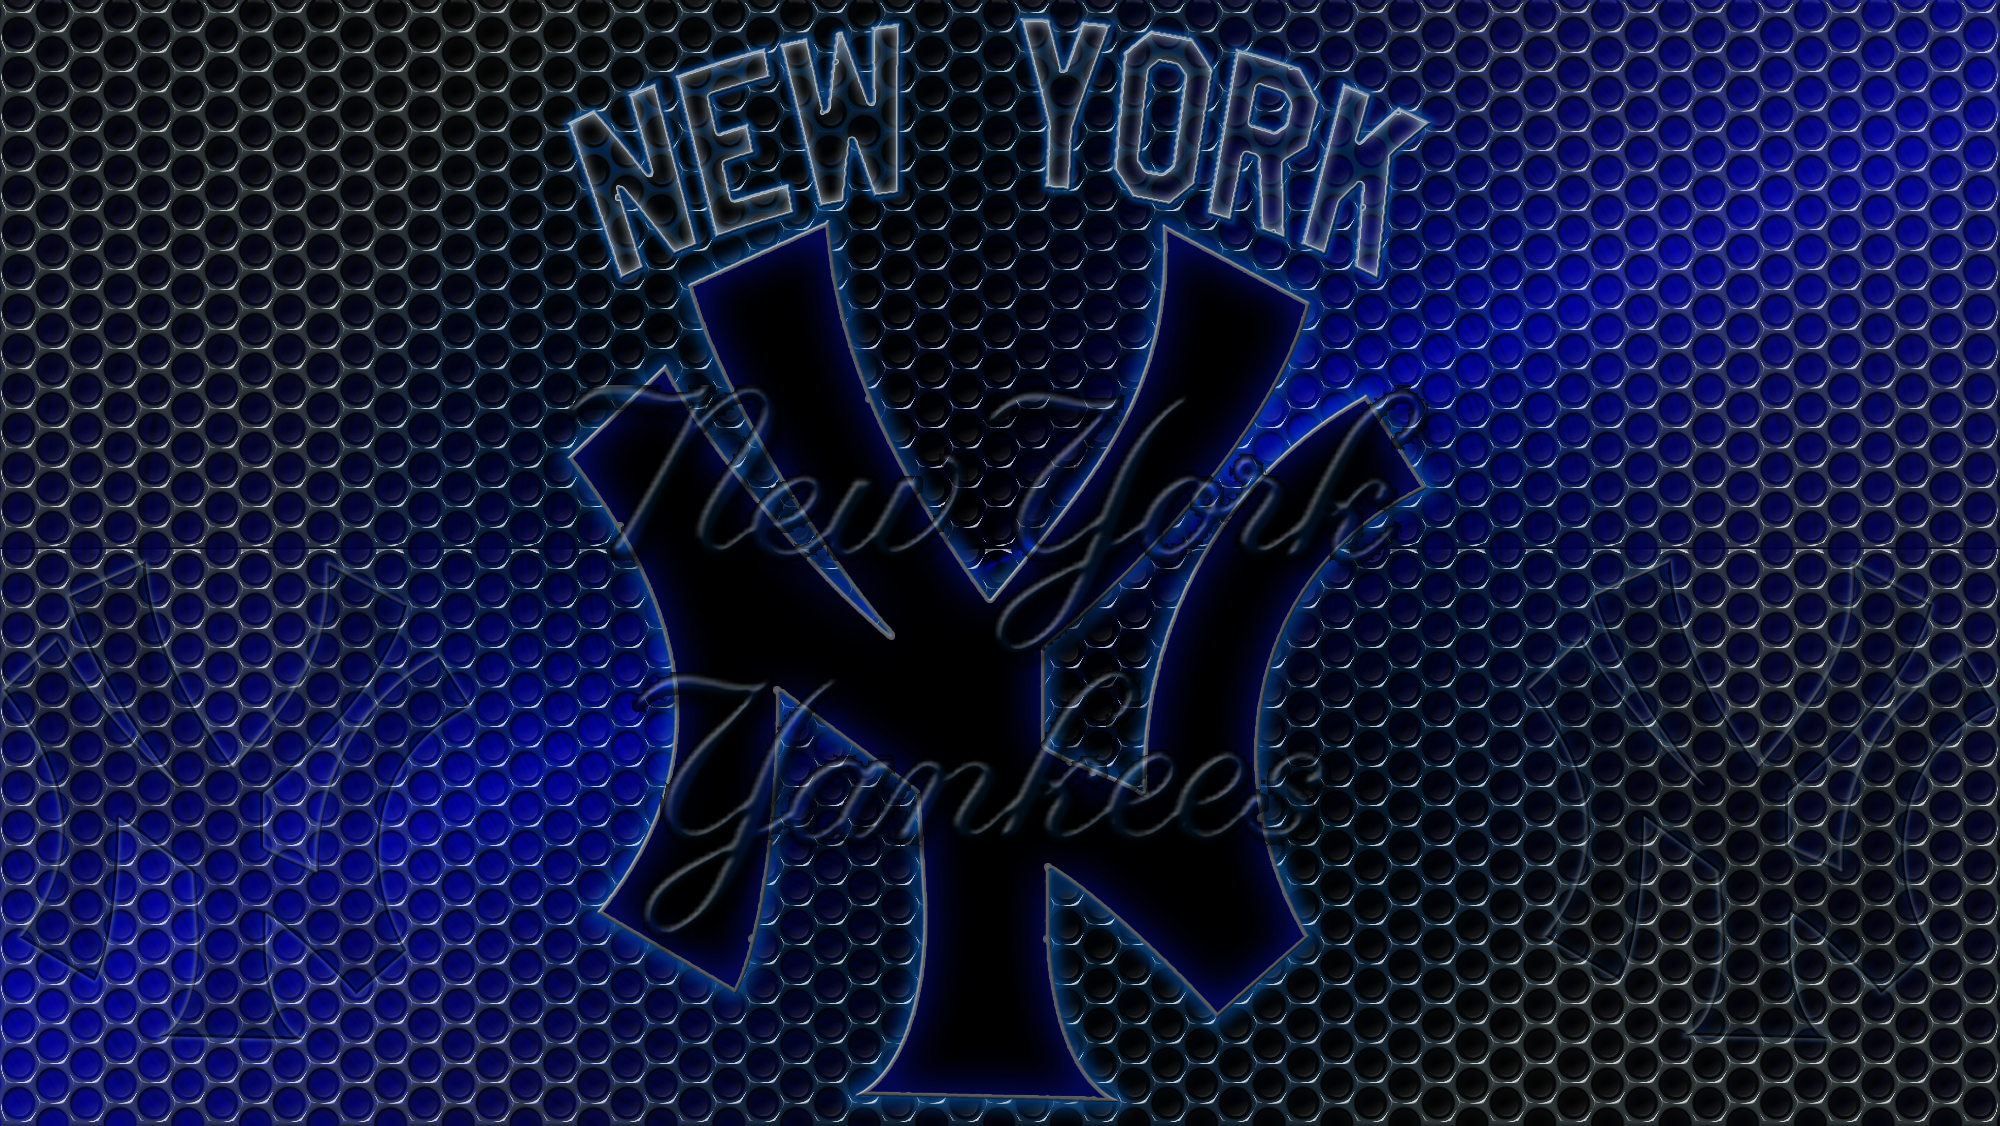 fond d'écran iphone new york yankees,bleu,police de caractère,bleu électrique,texte,bleu majorelle